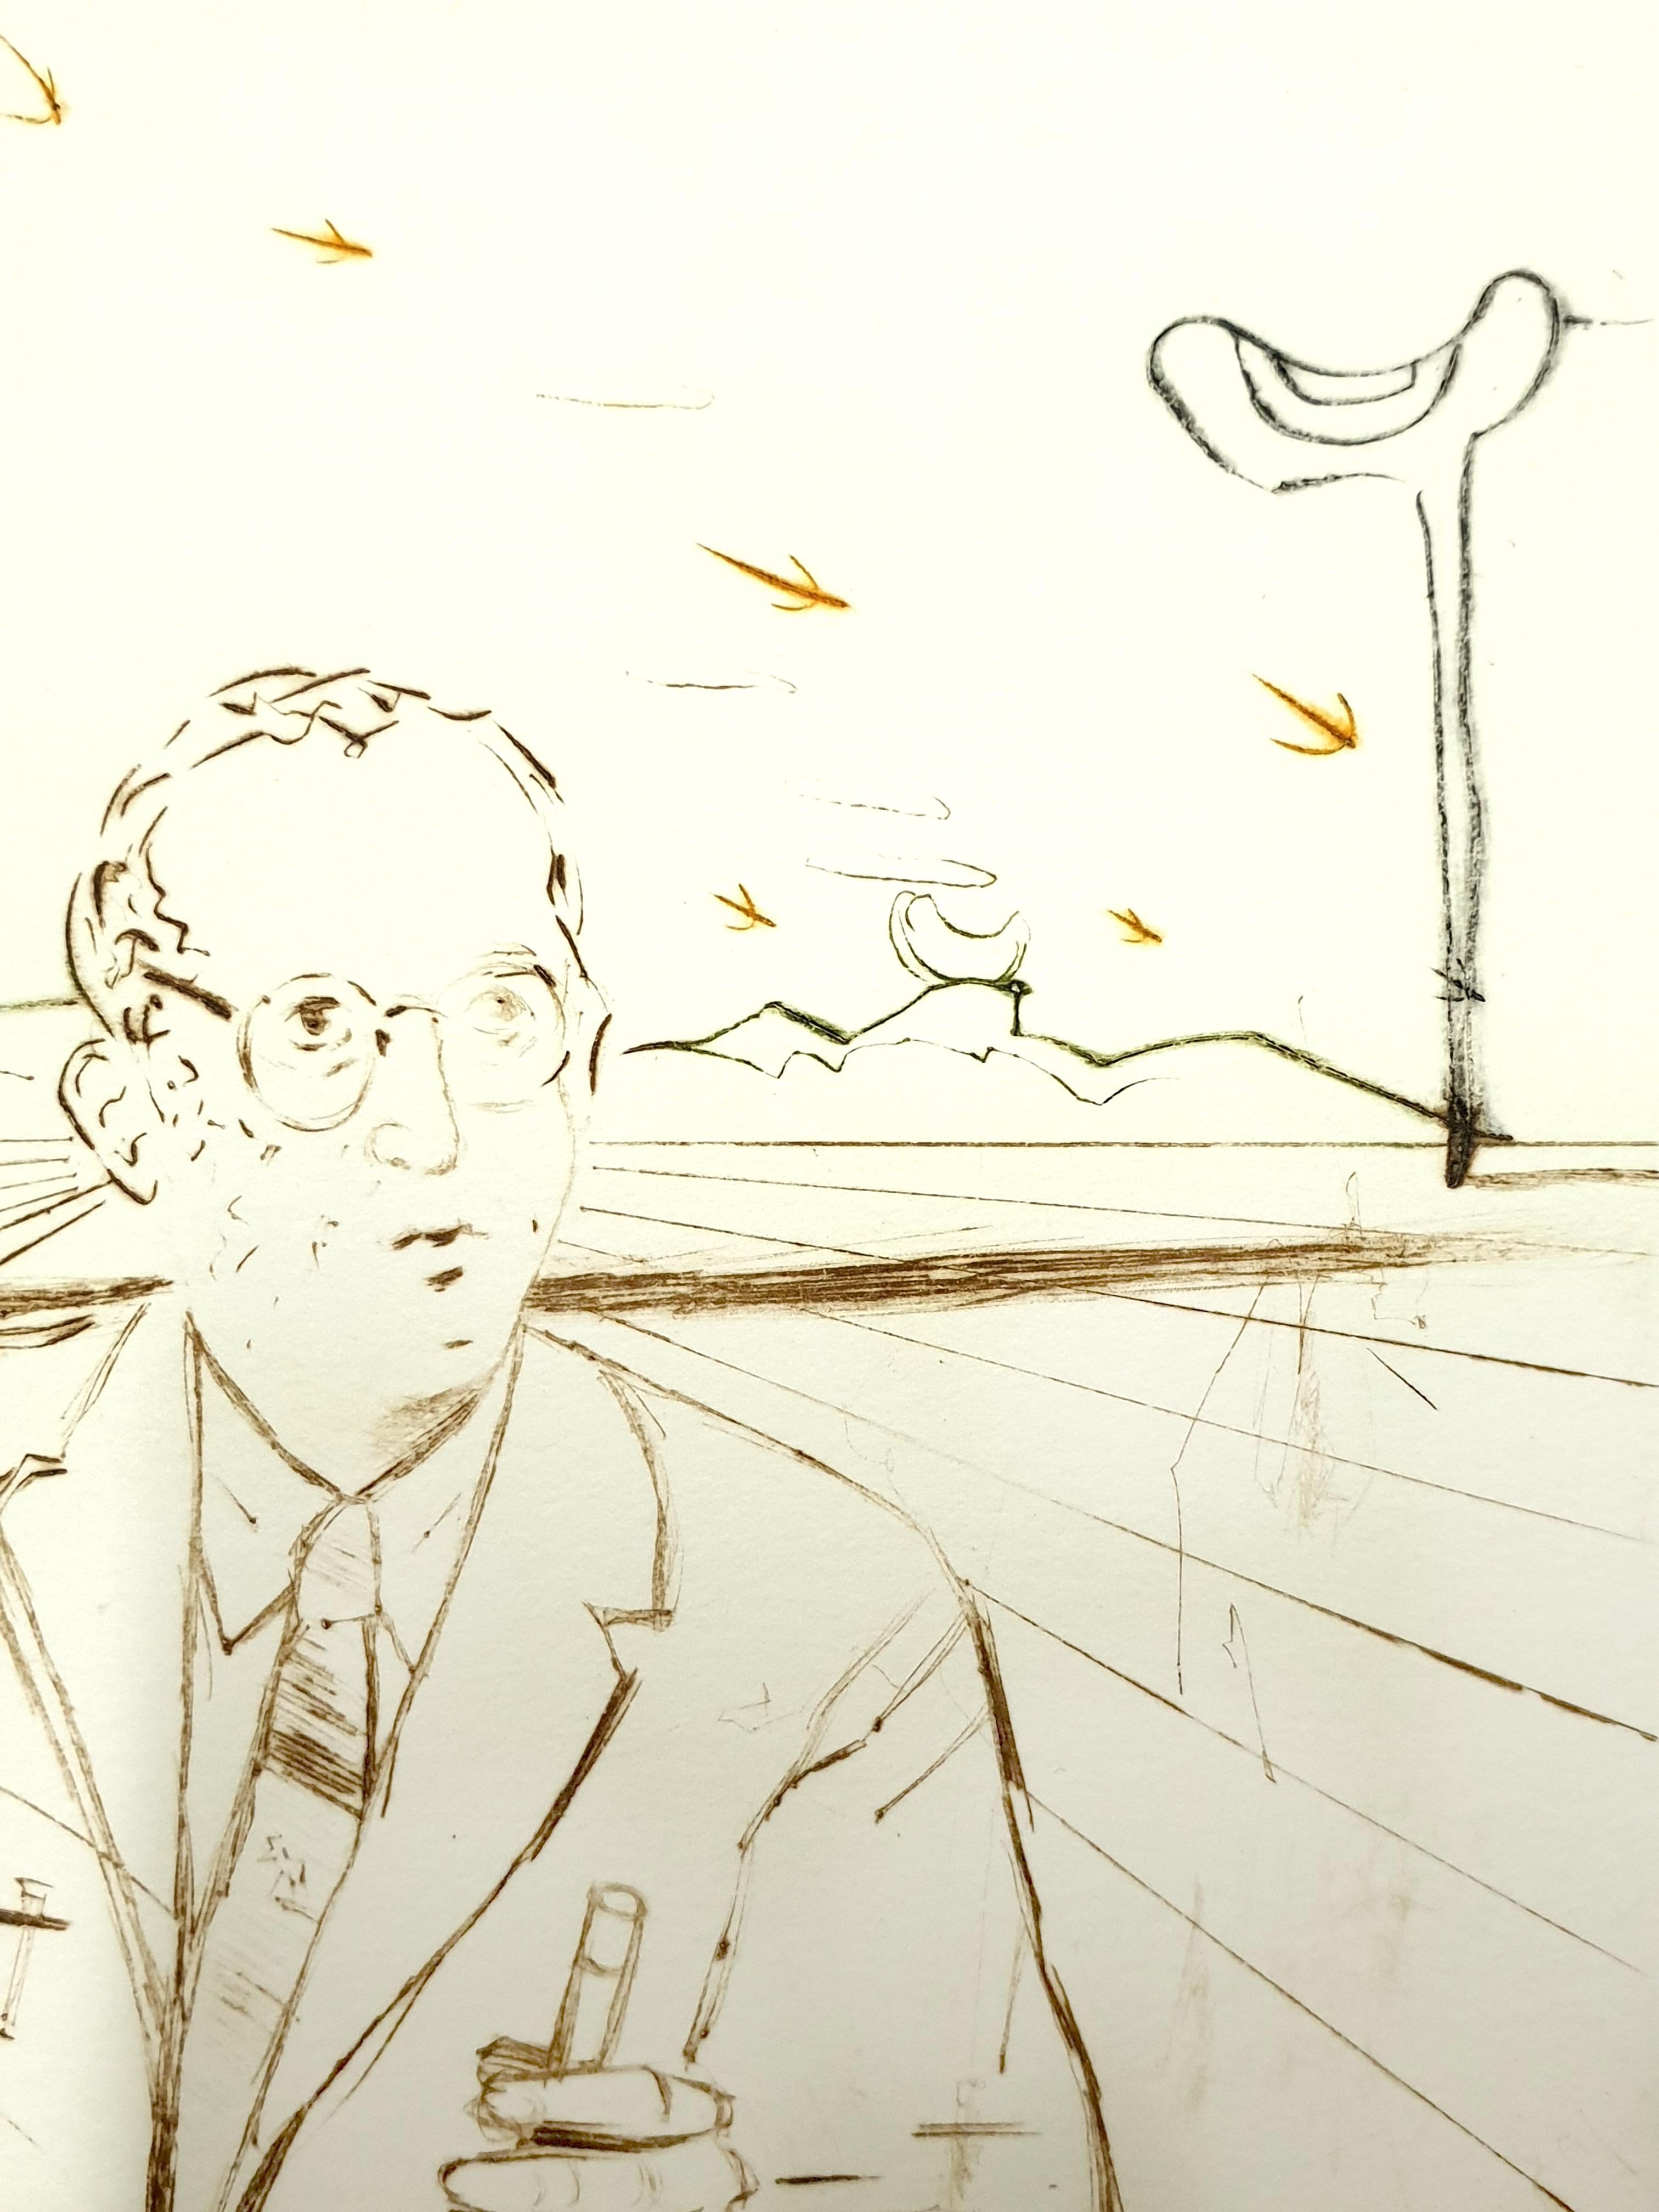 Salvador Dali - Jonas Salk - Original Handsigned Engraving
Dimensions: 17.5 x 12.5 cm
1970
Signed in pencil
EA
Jean Schneider, Basel
References : Field 70-5